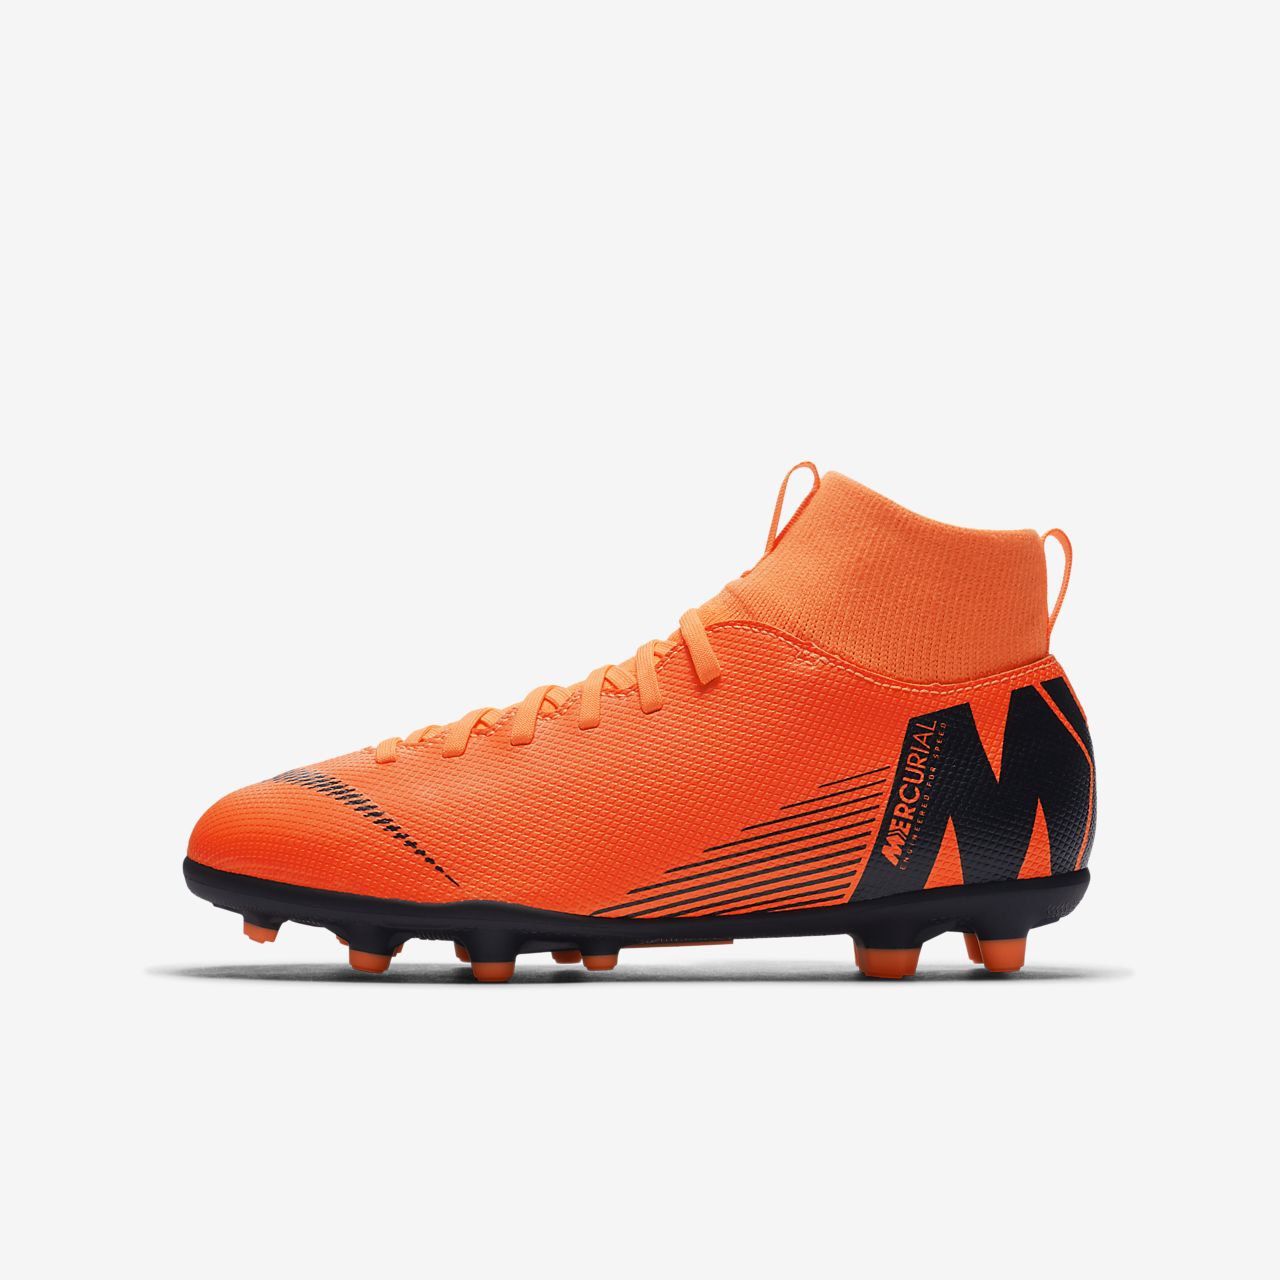 Nike Mercurial Superfly VI Academy MG Football shoe.